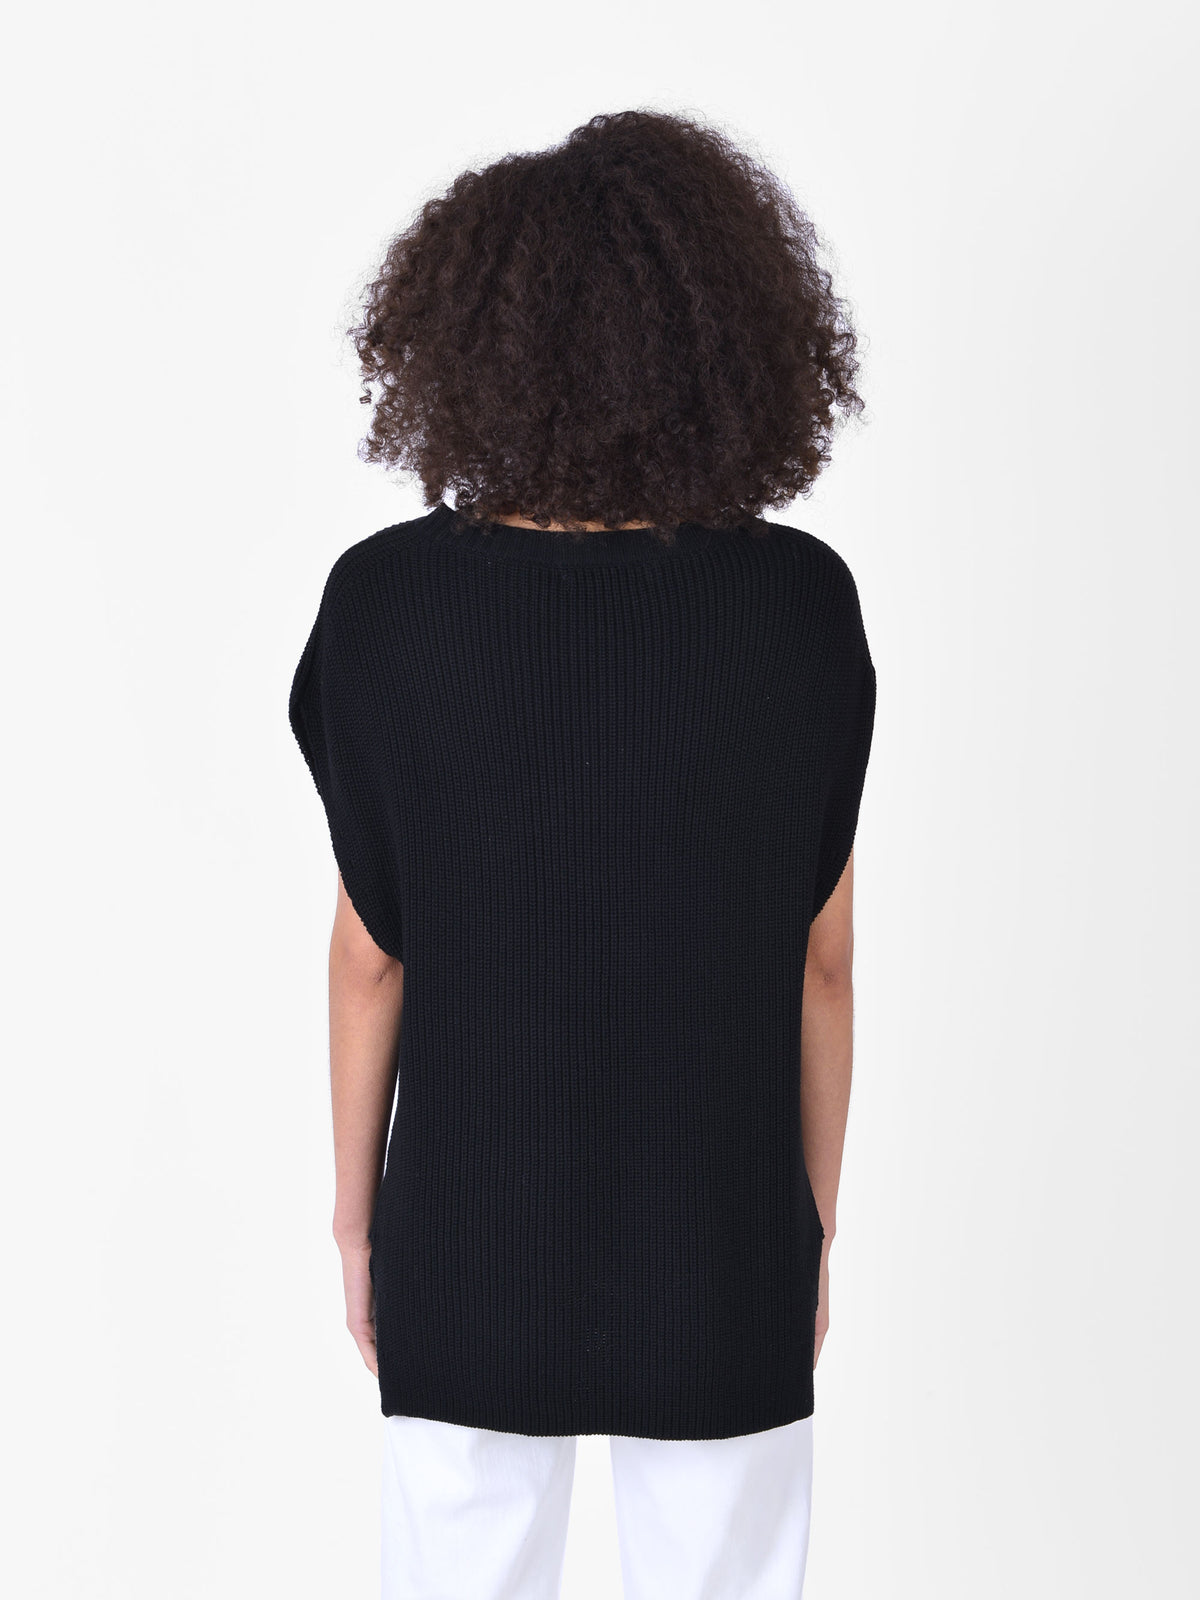 Black Knitted Vest Top